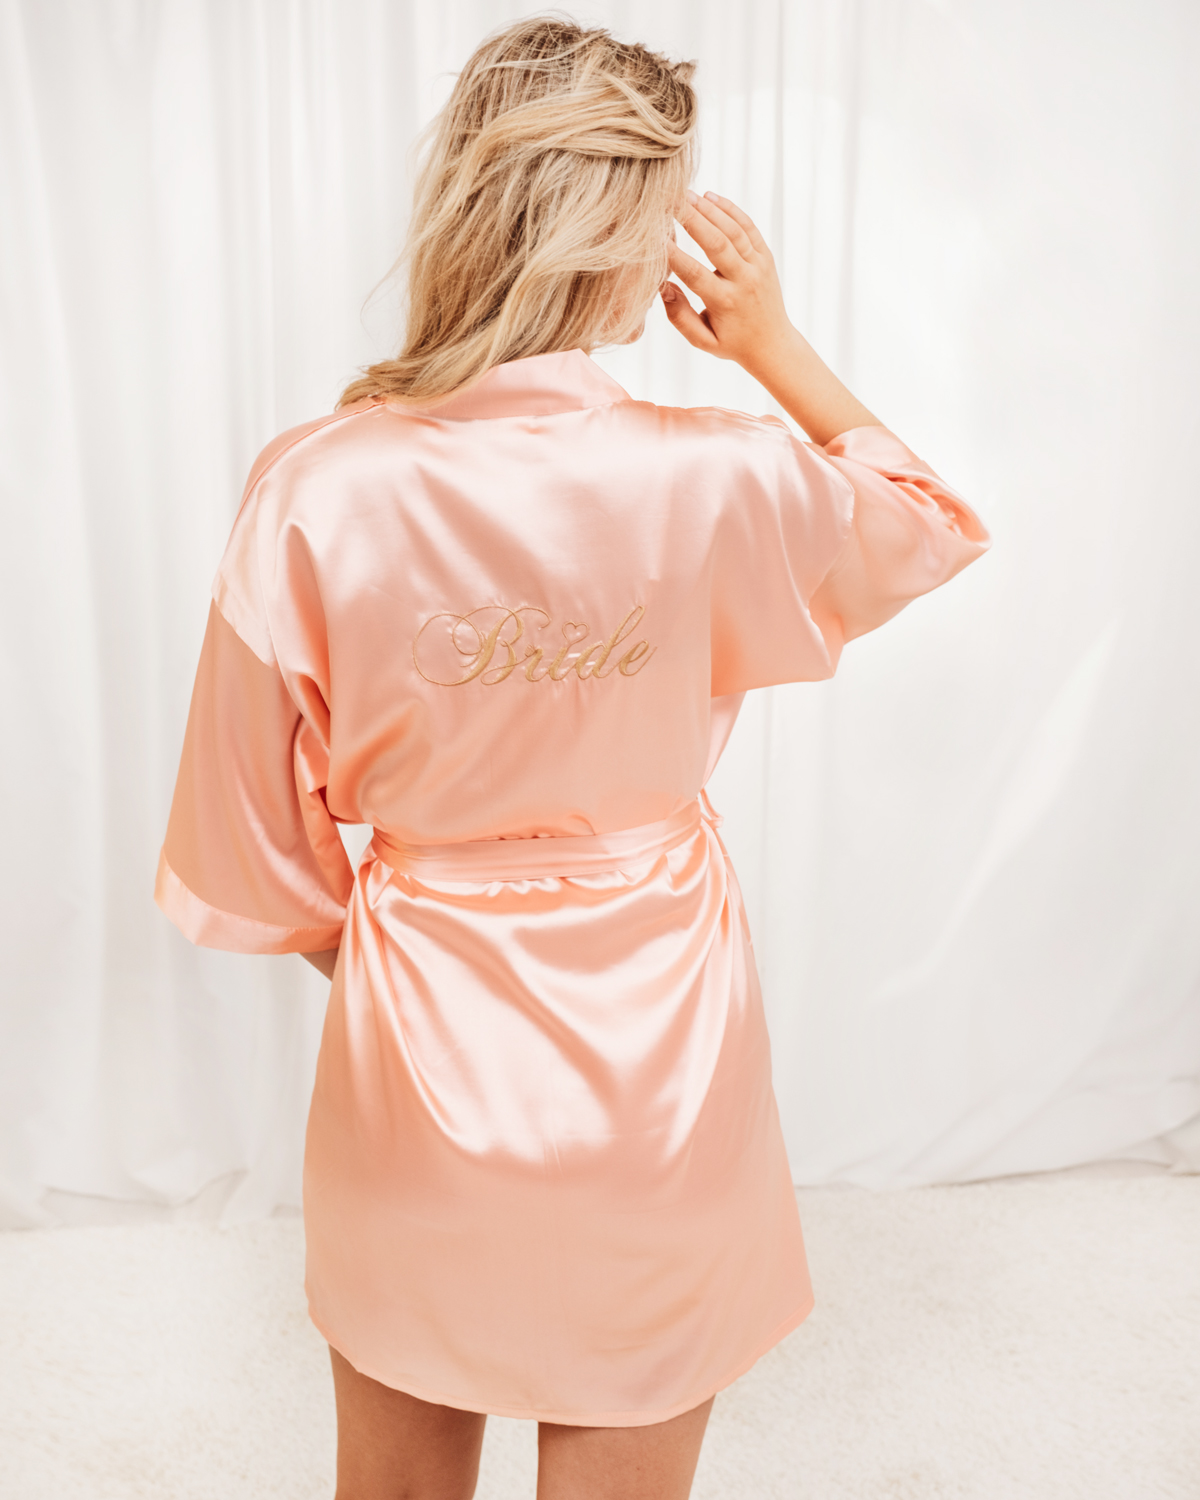 bruids-kimono-roze-achterkant